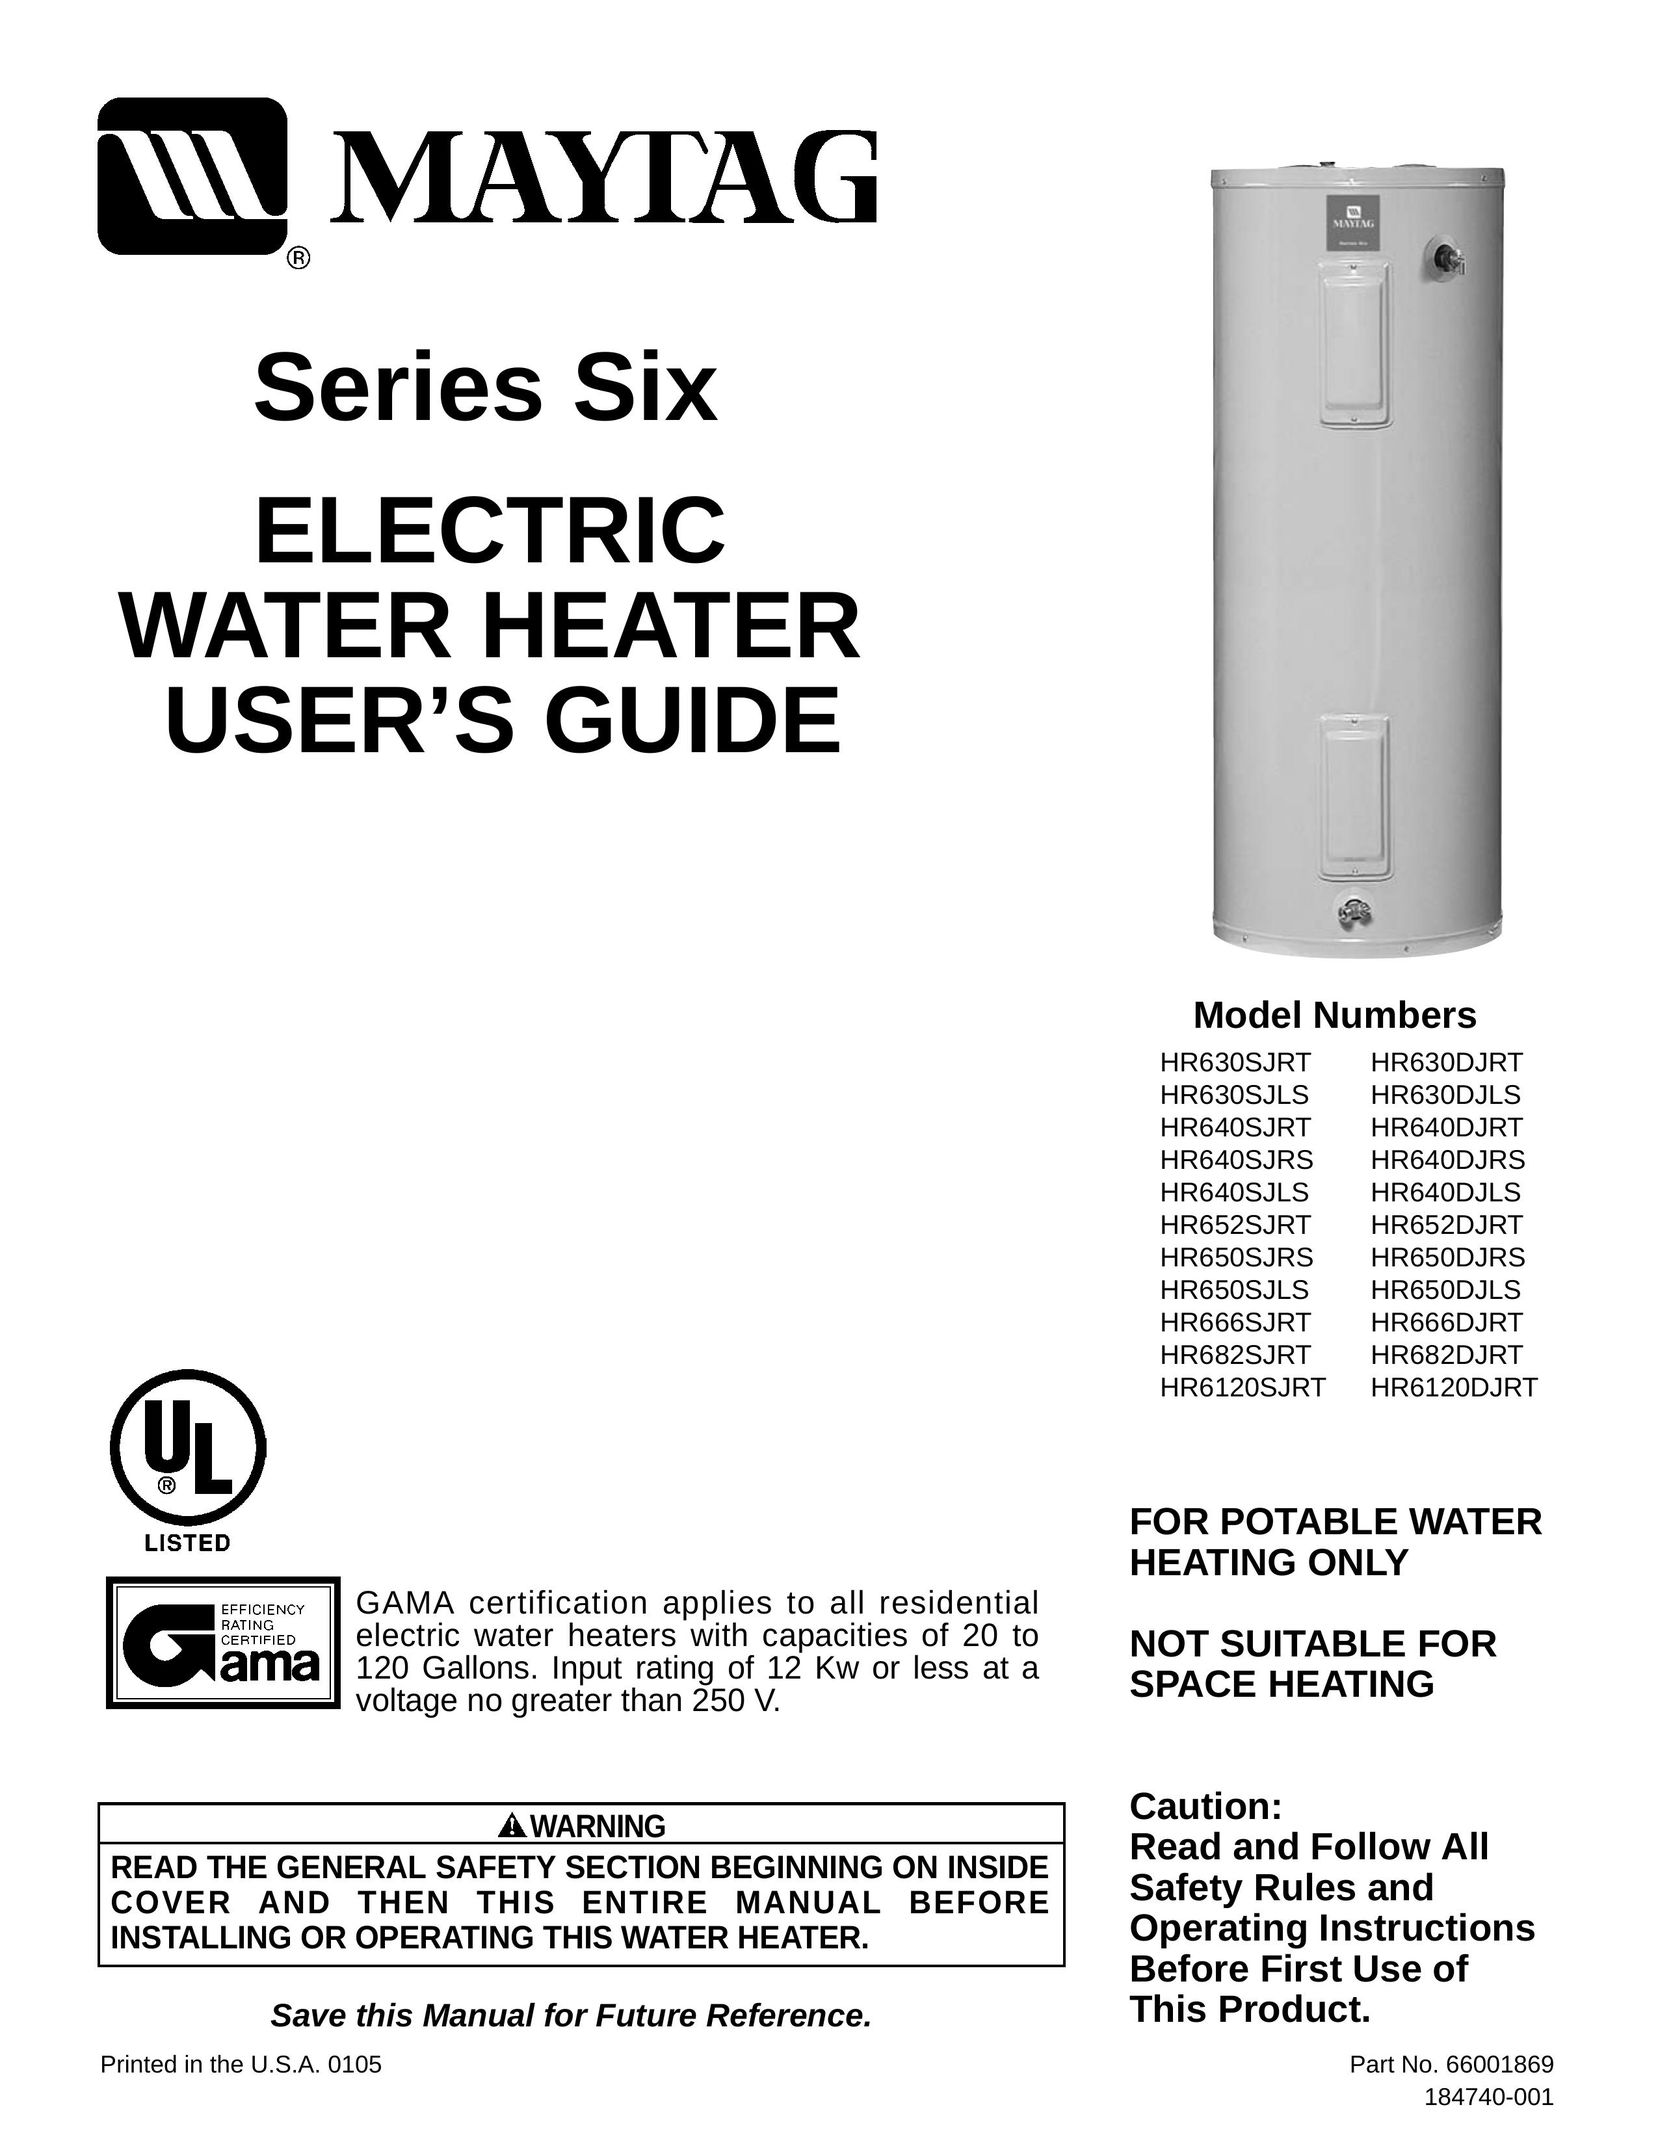 Maytag HR682SJRT Water Heater User Manual